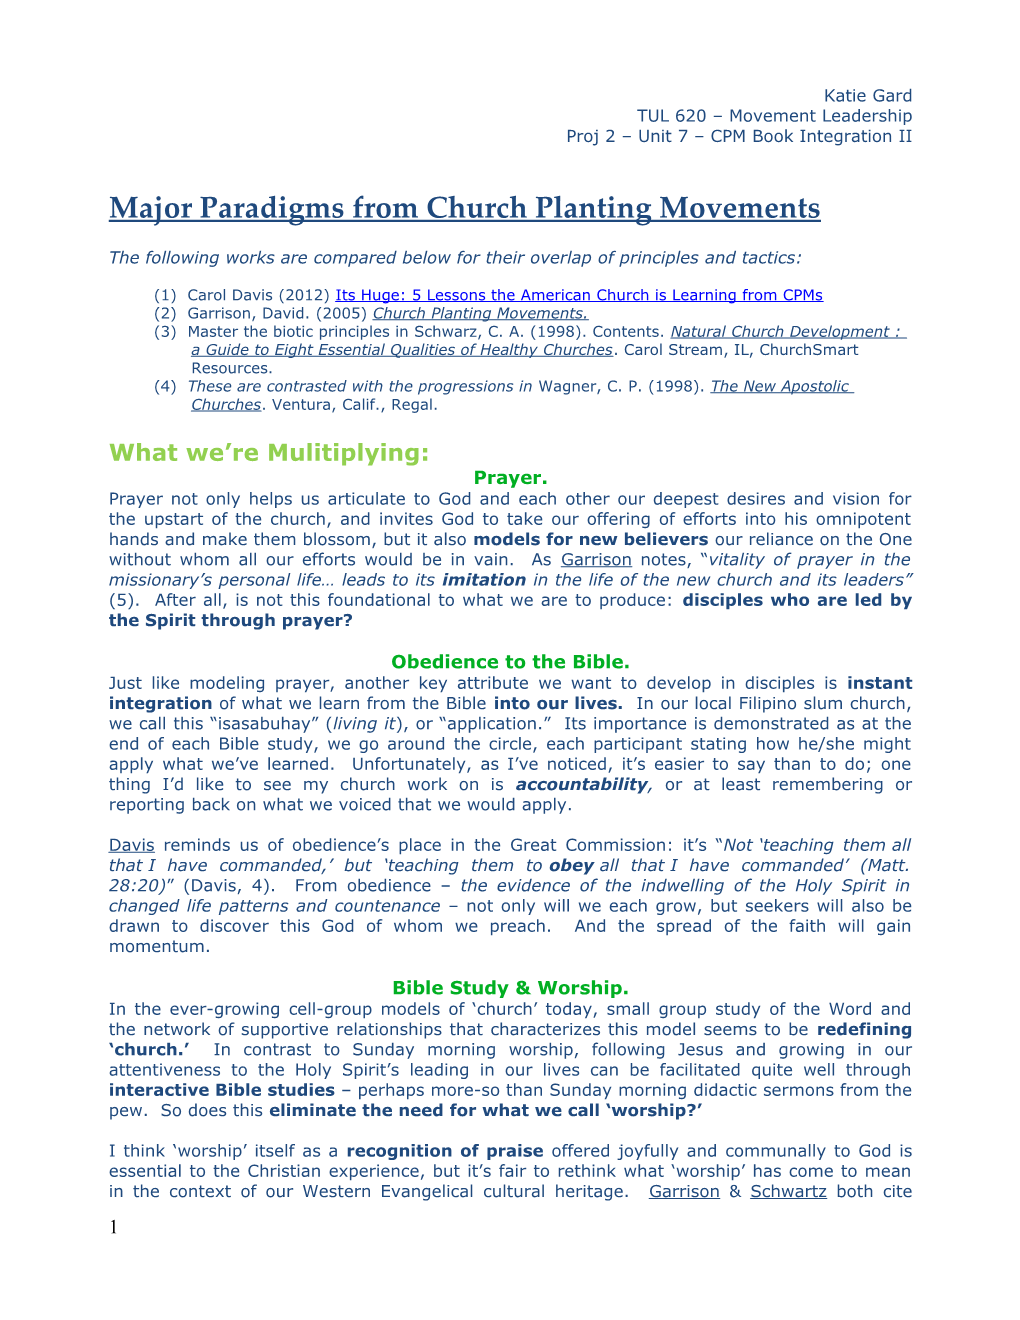 Major Paradigms from Church Planting Movements